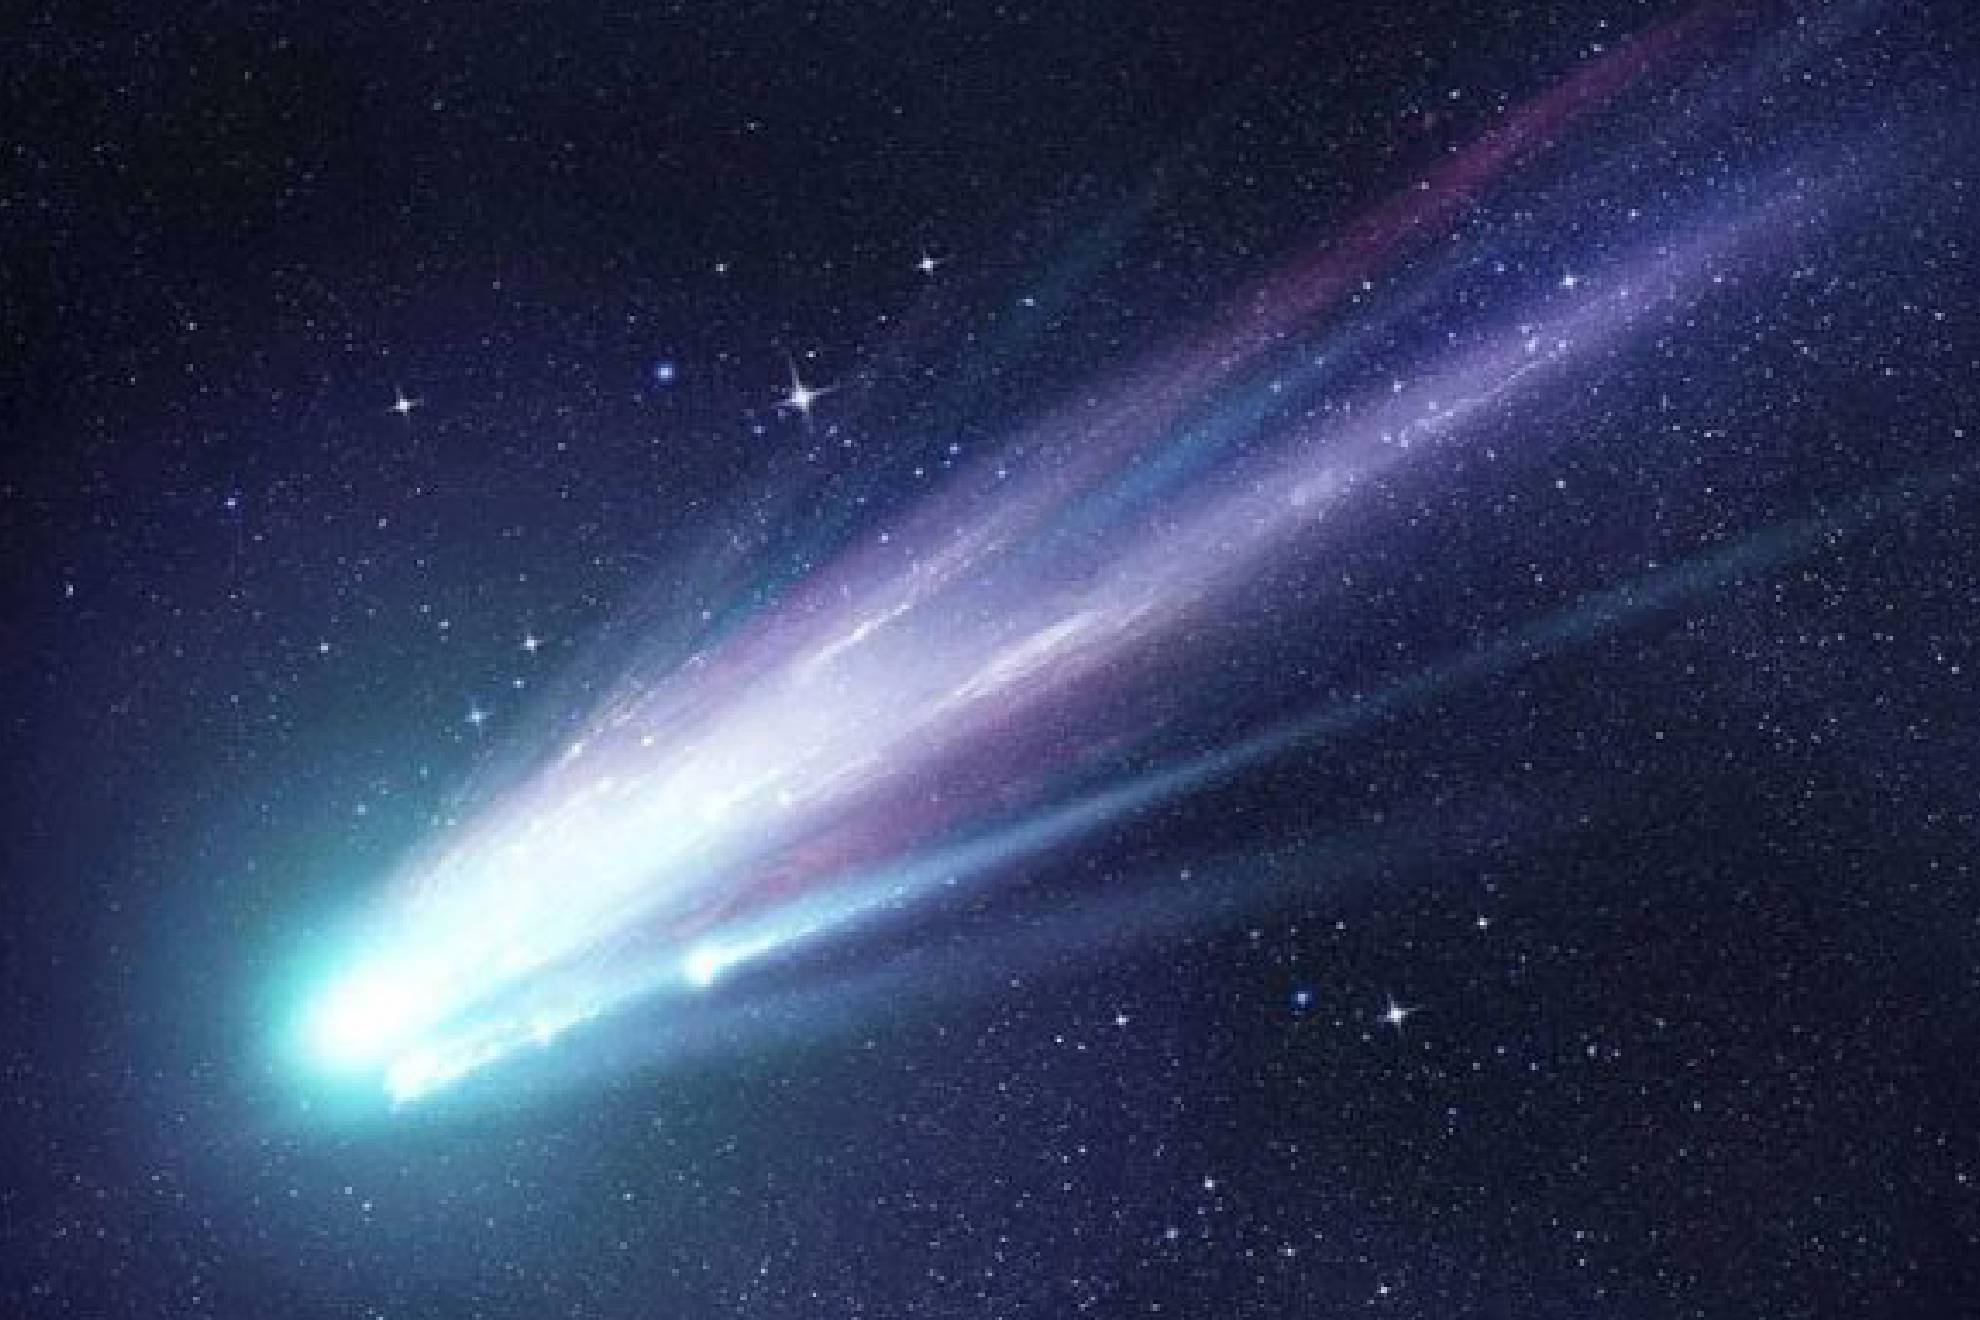 El Cometa Nishimura est de paseo por el sistema solar